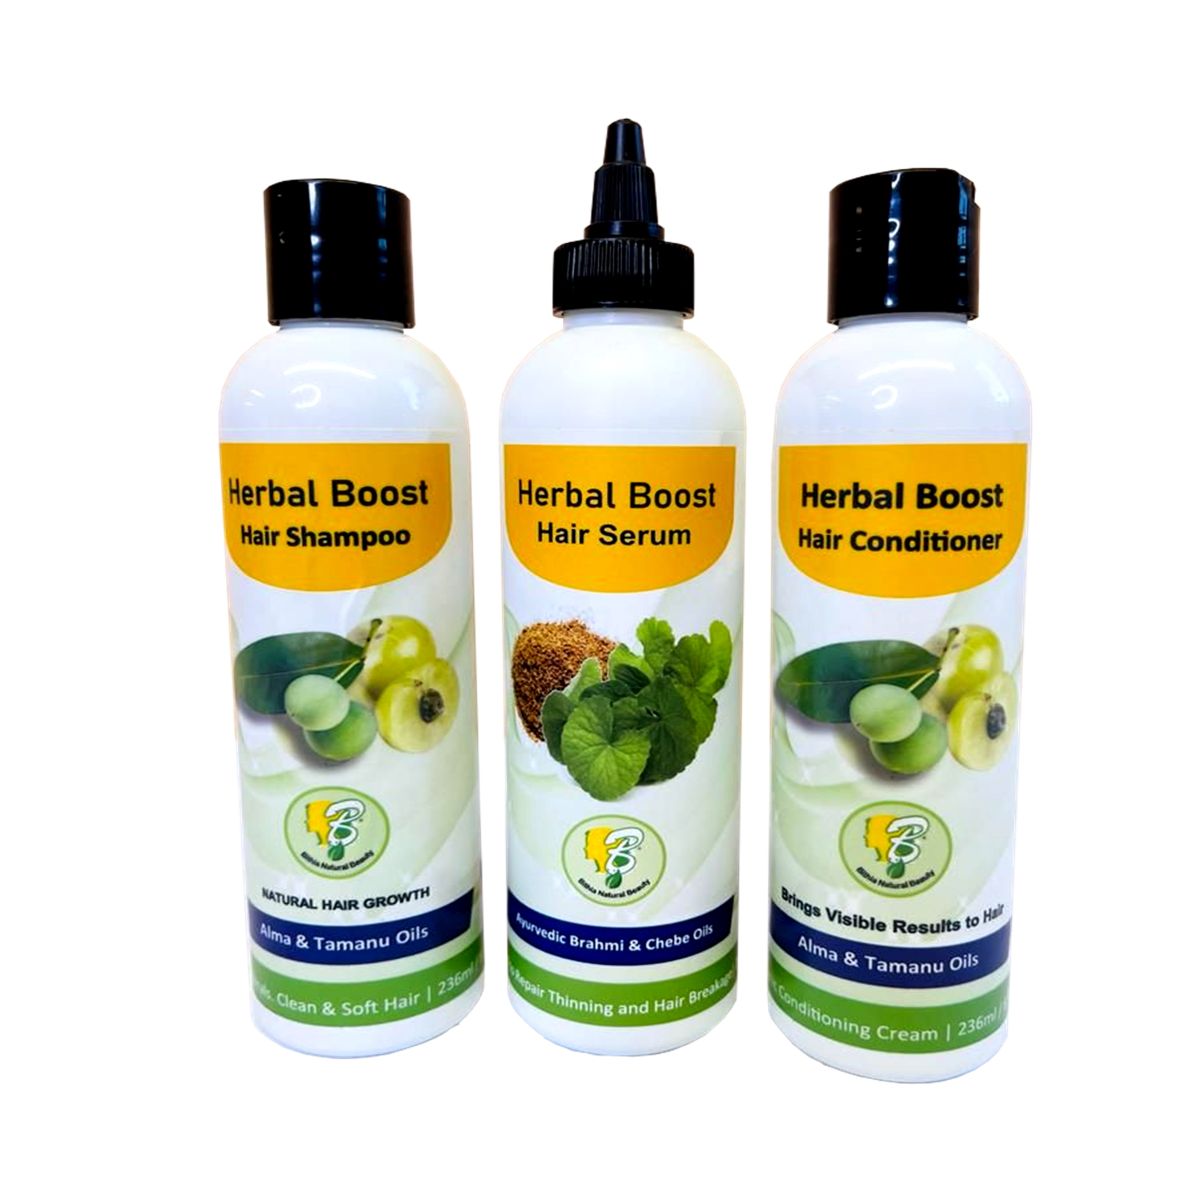 Herbal Boost Shampoo, Hair Serum, Conditioner - 8 Oz